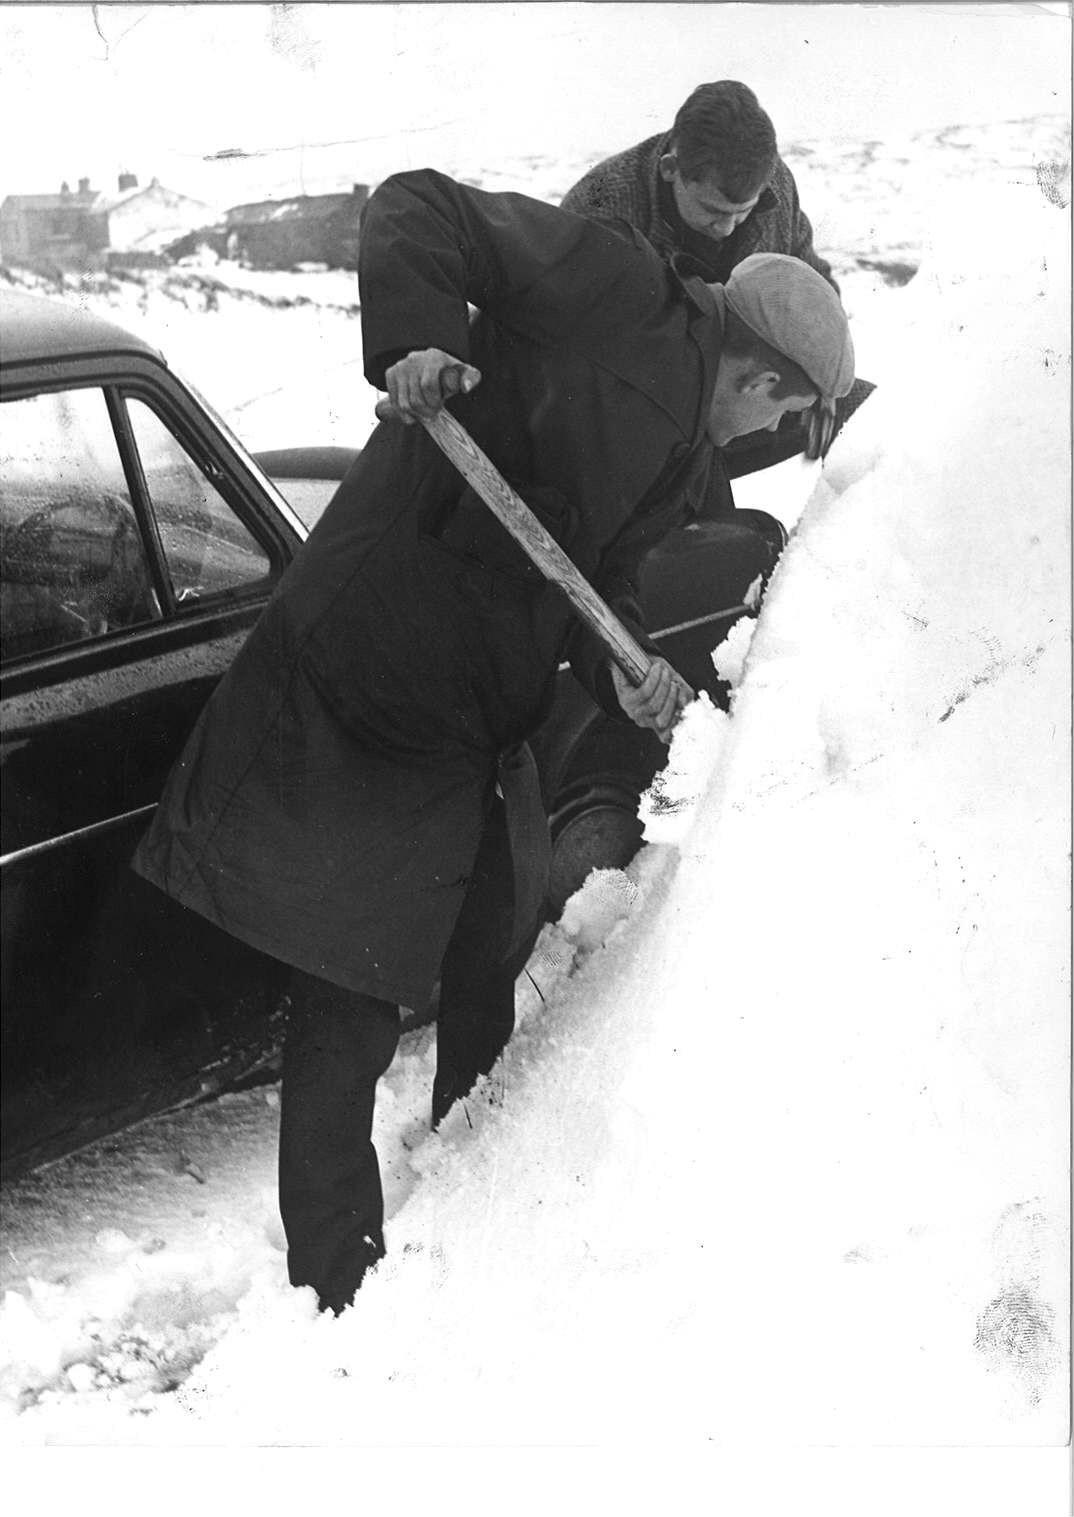 I think we need a bigger shovel - December 1966